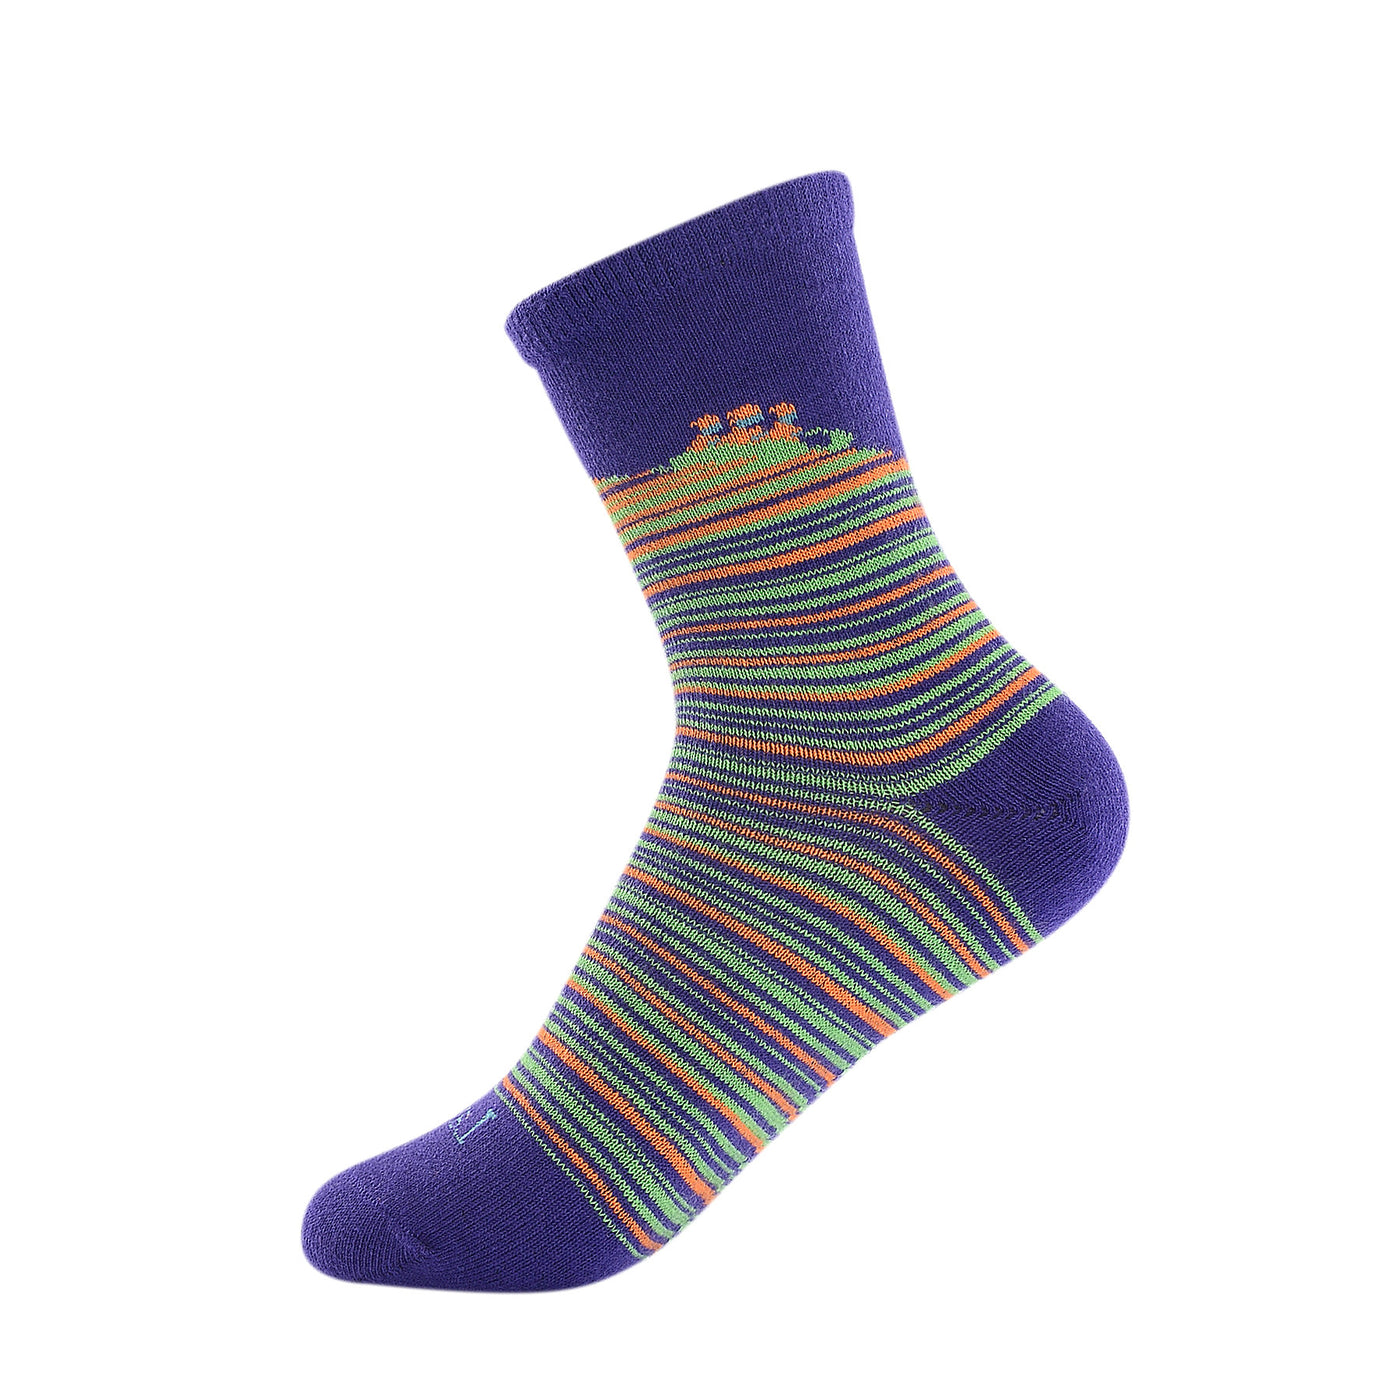 Stripe Pattern Laulax 6 Pairs Combed Cotton Boy's Socks Size UK 9-11.5/Europe 27-30 Gift Set